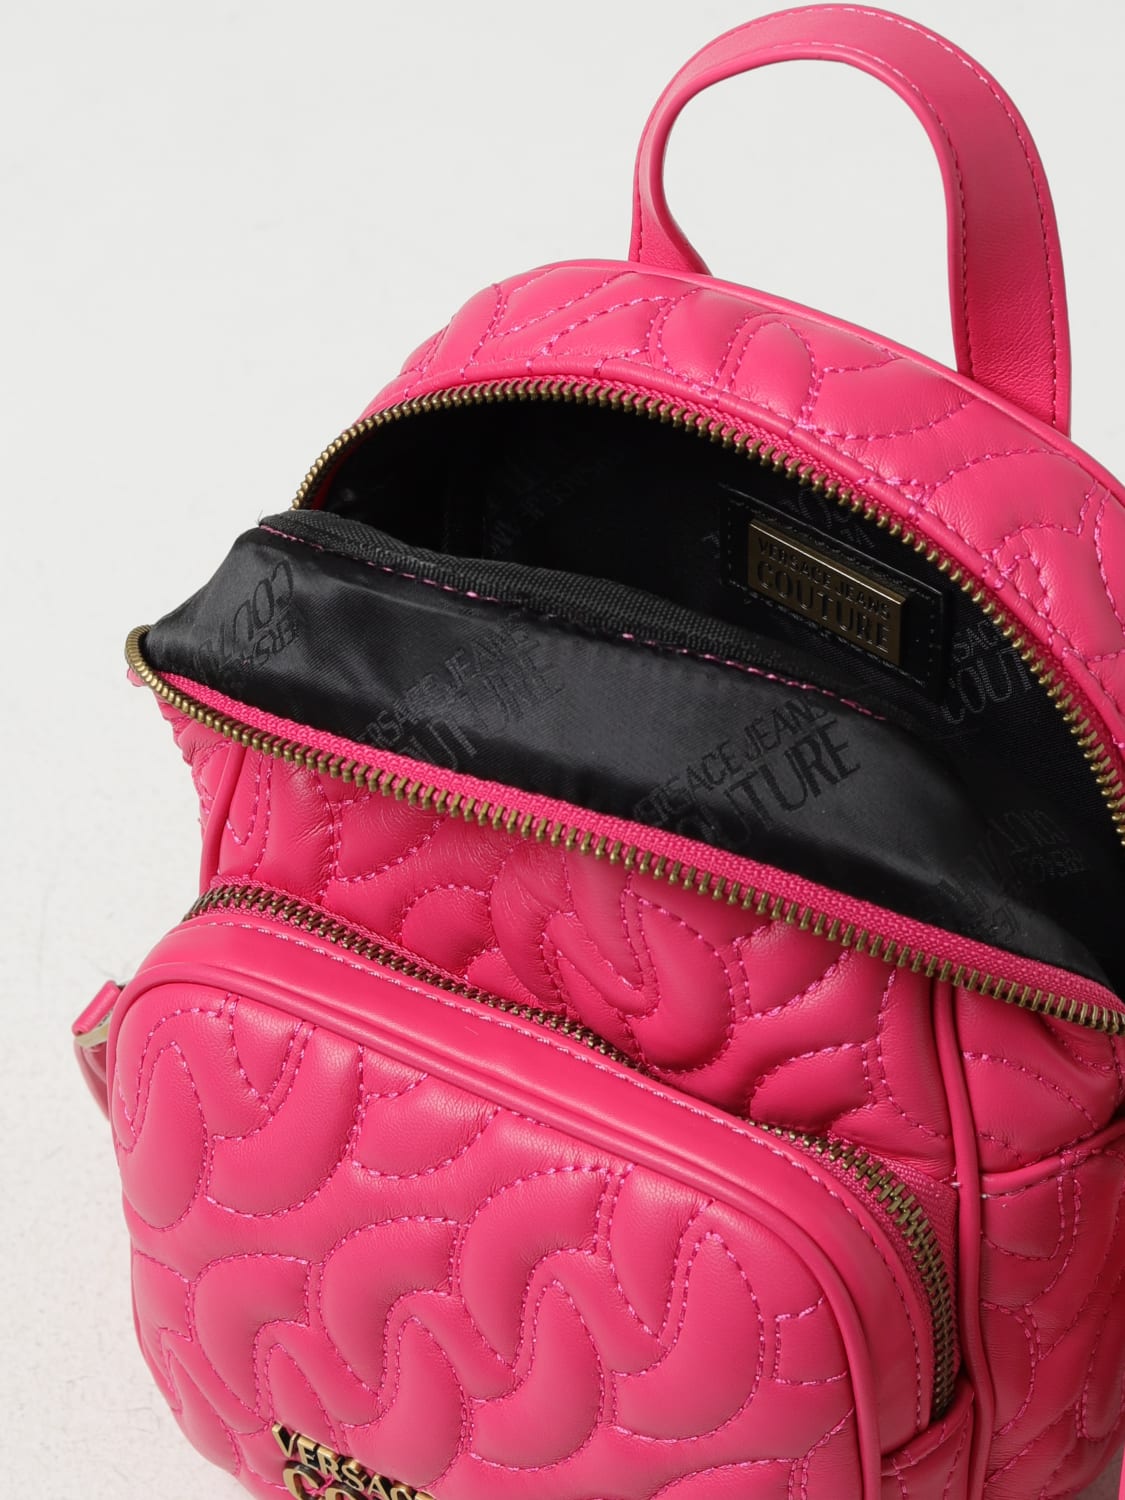 Versace Pink Logo Backpack Versace